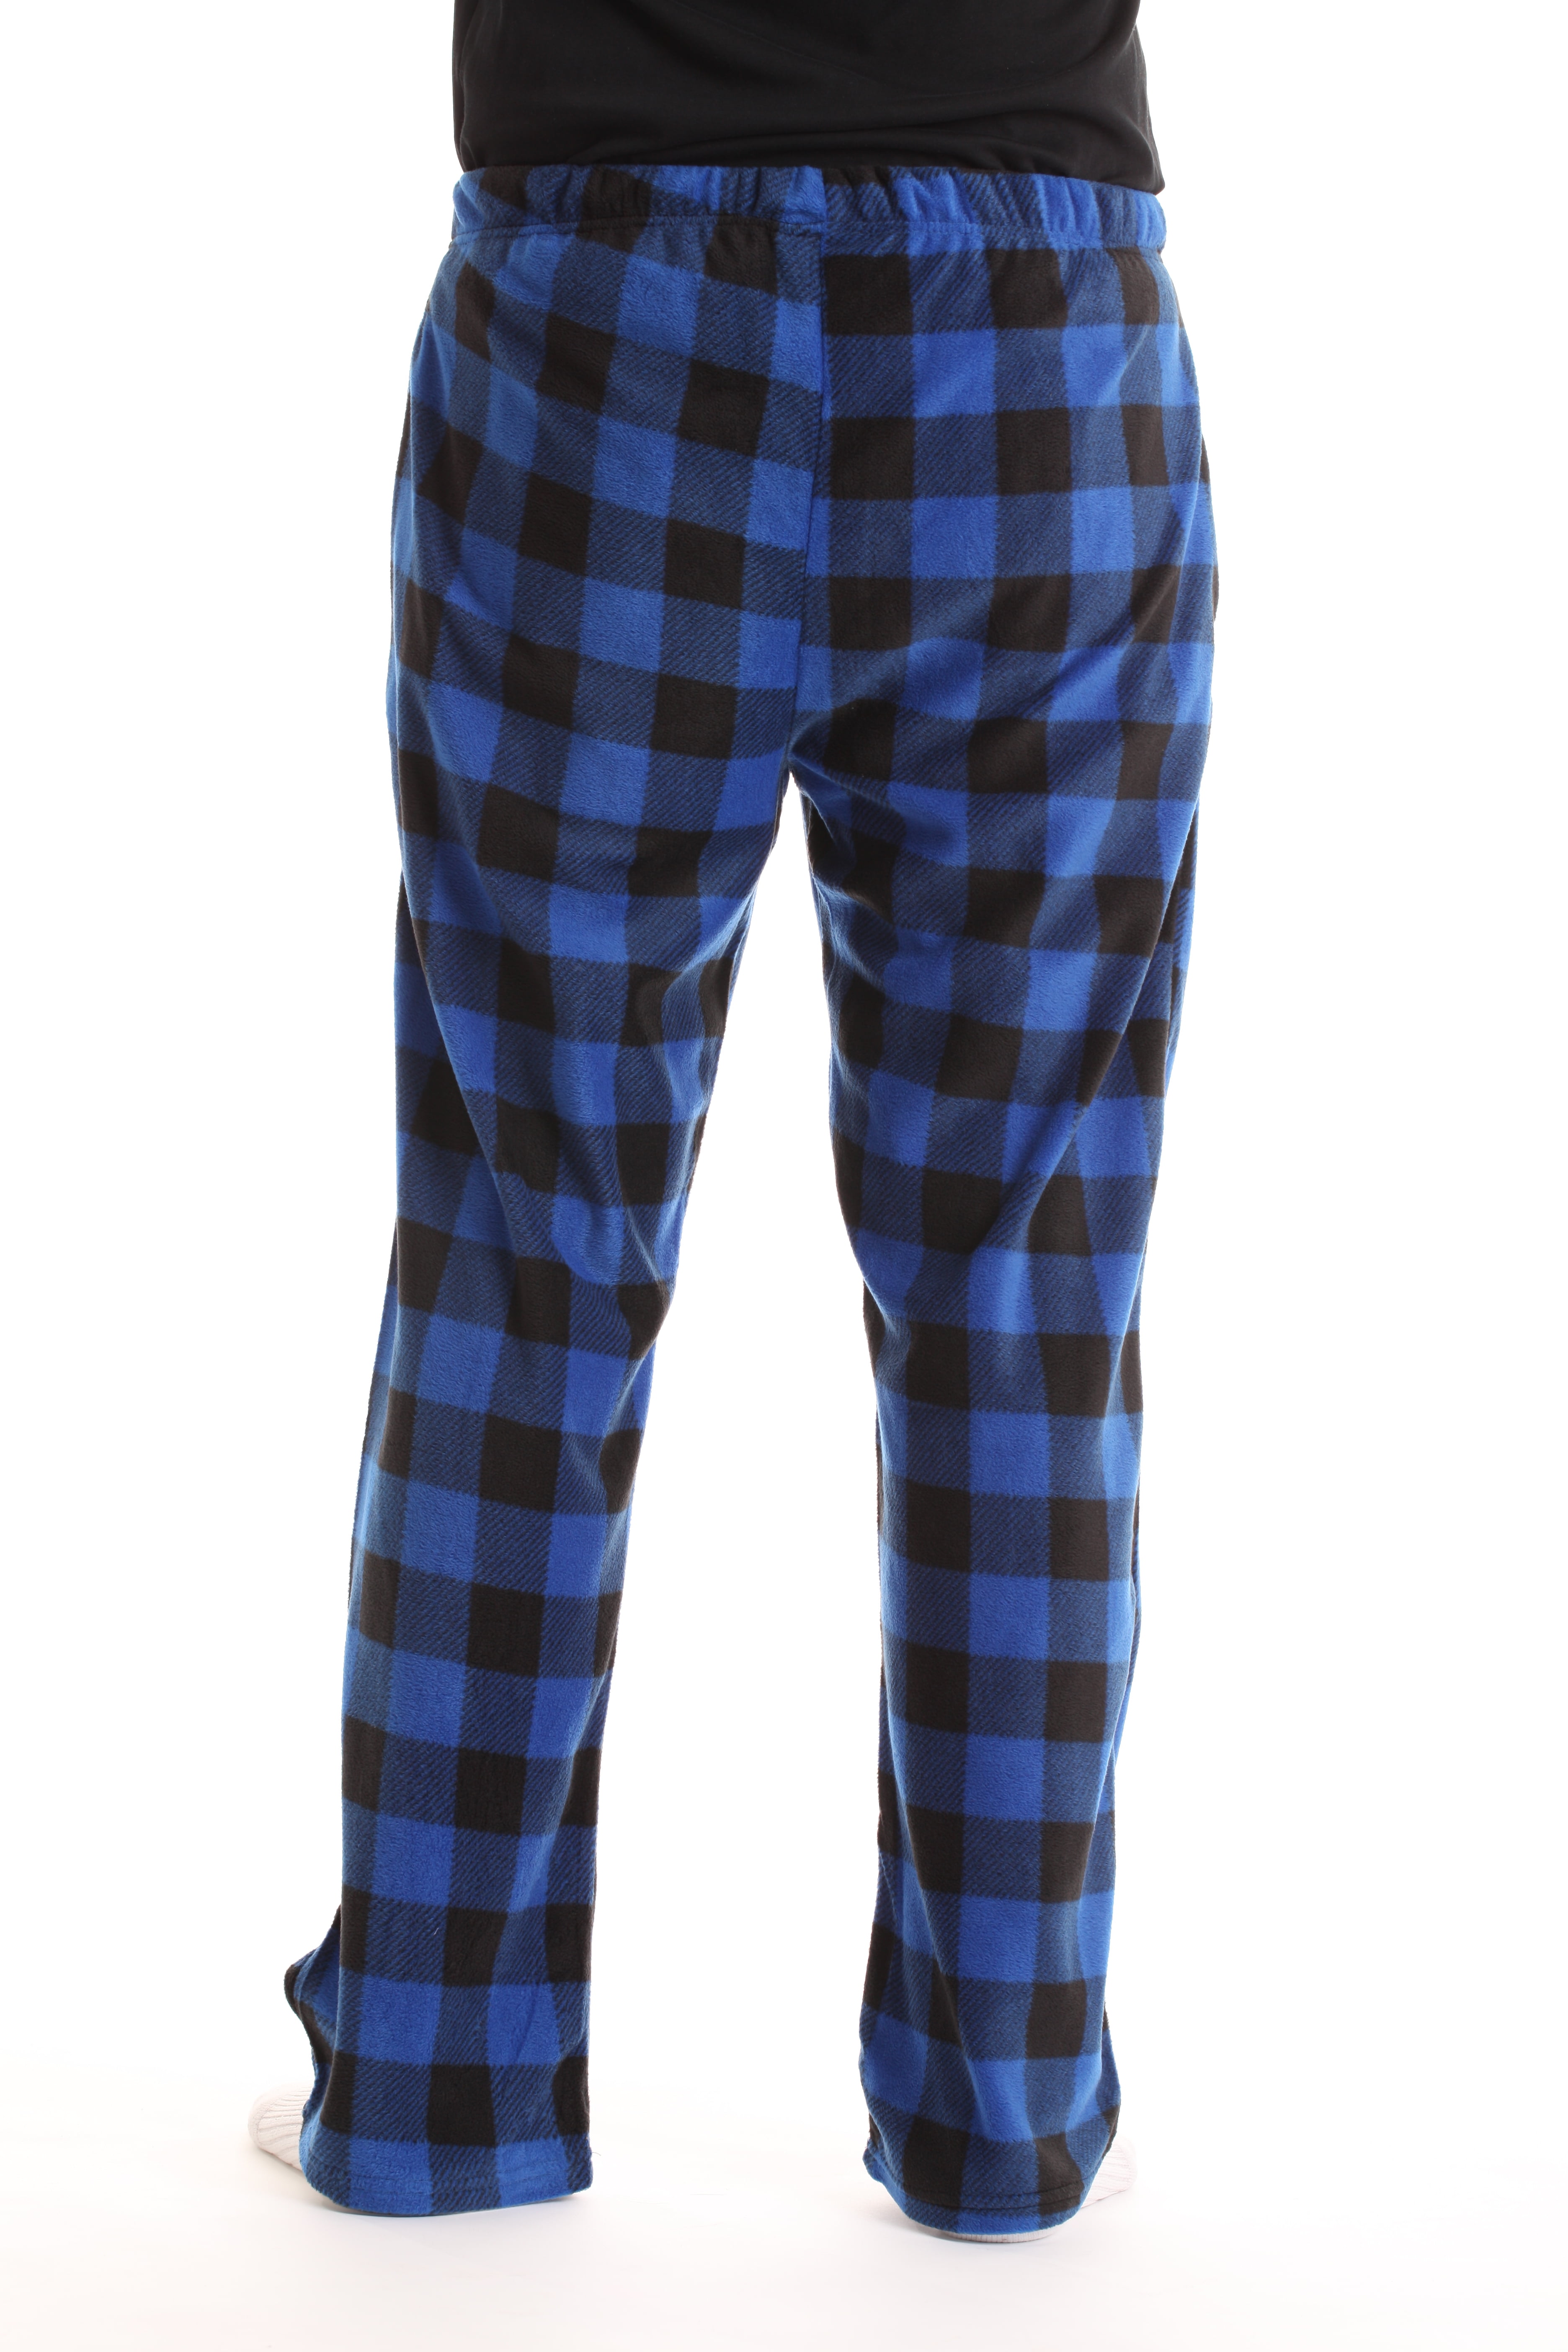 followme Microfleece Men's Buffalo Plaid Pajama Pants with Pockets (Blue  Buffalo Plaid, Large) 